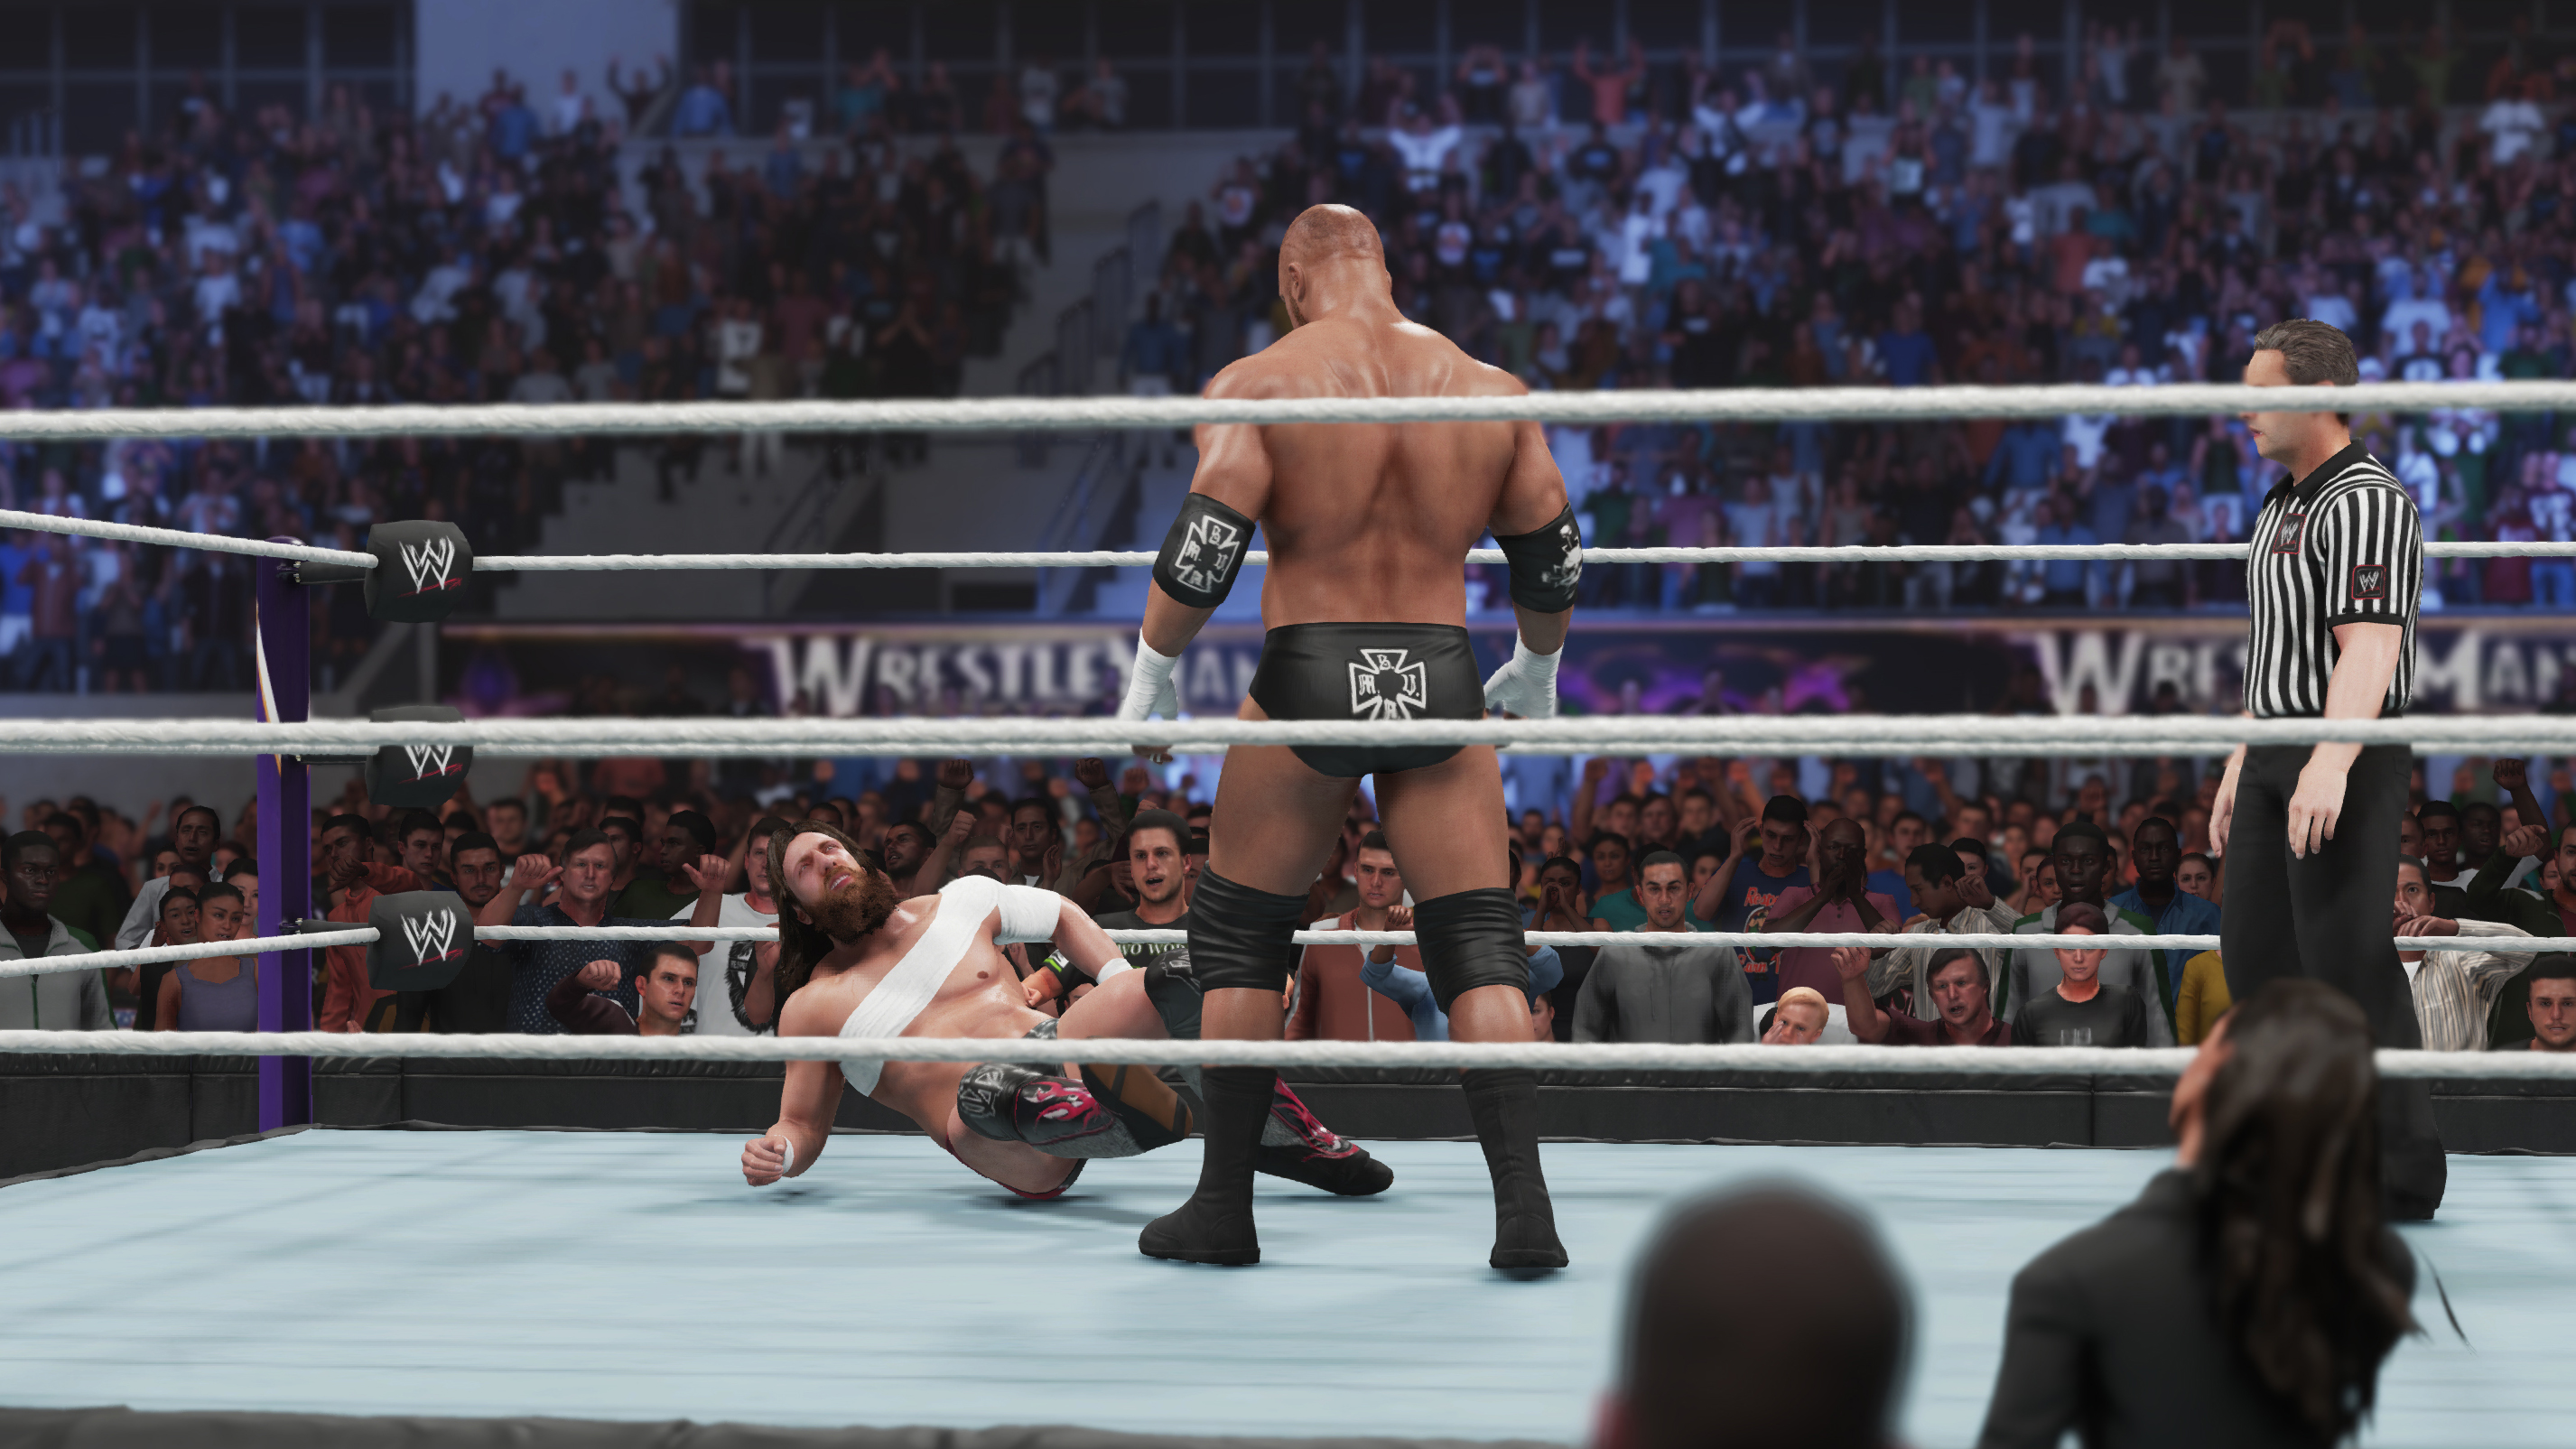 WWE screenshot in the ring